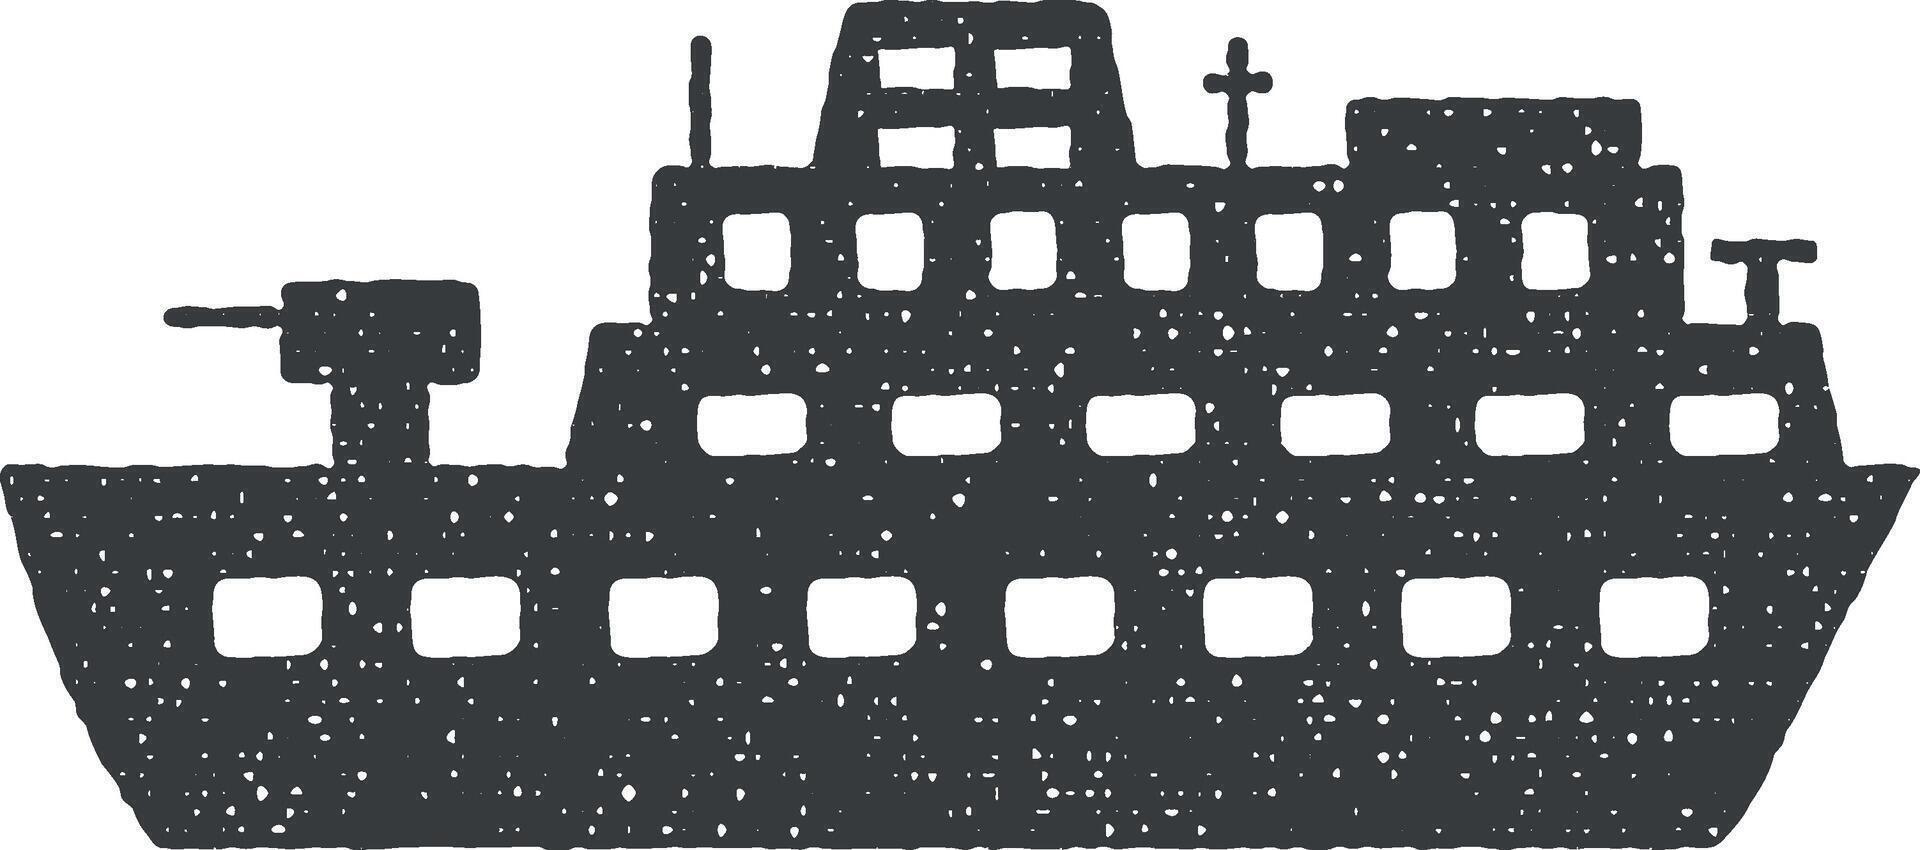 agua transporte, buque de guerra vector icono ilustración con sello efecto